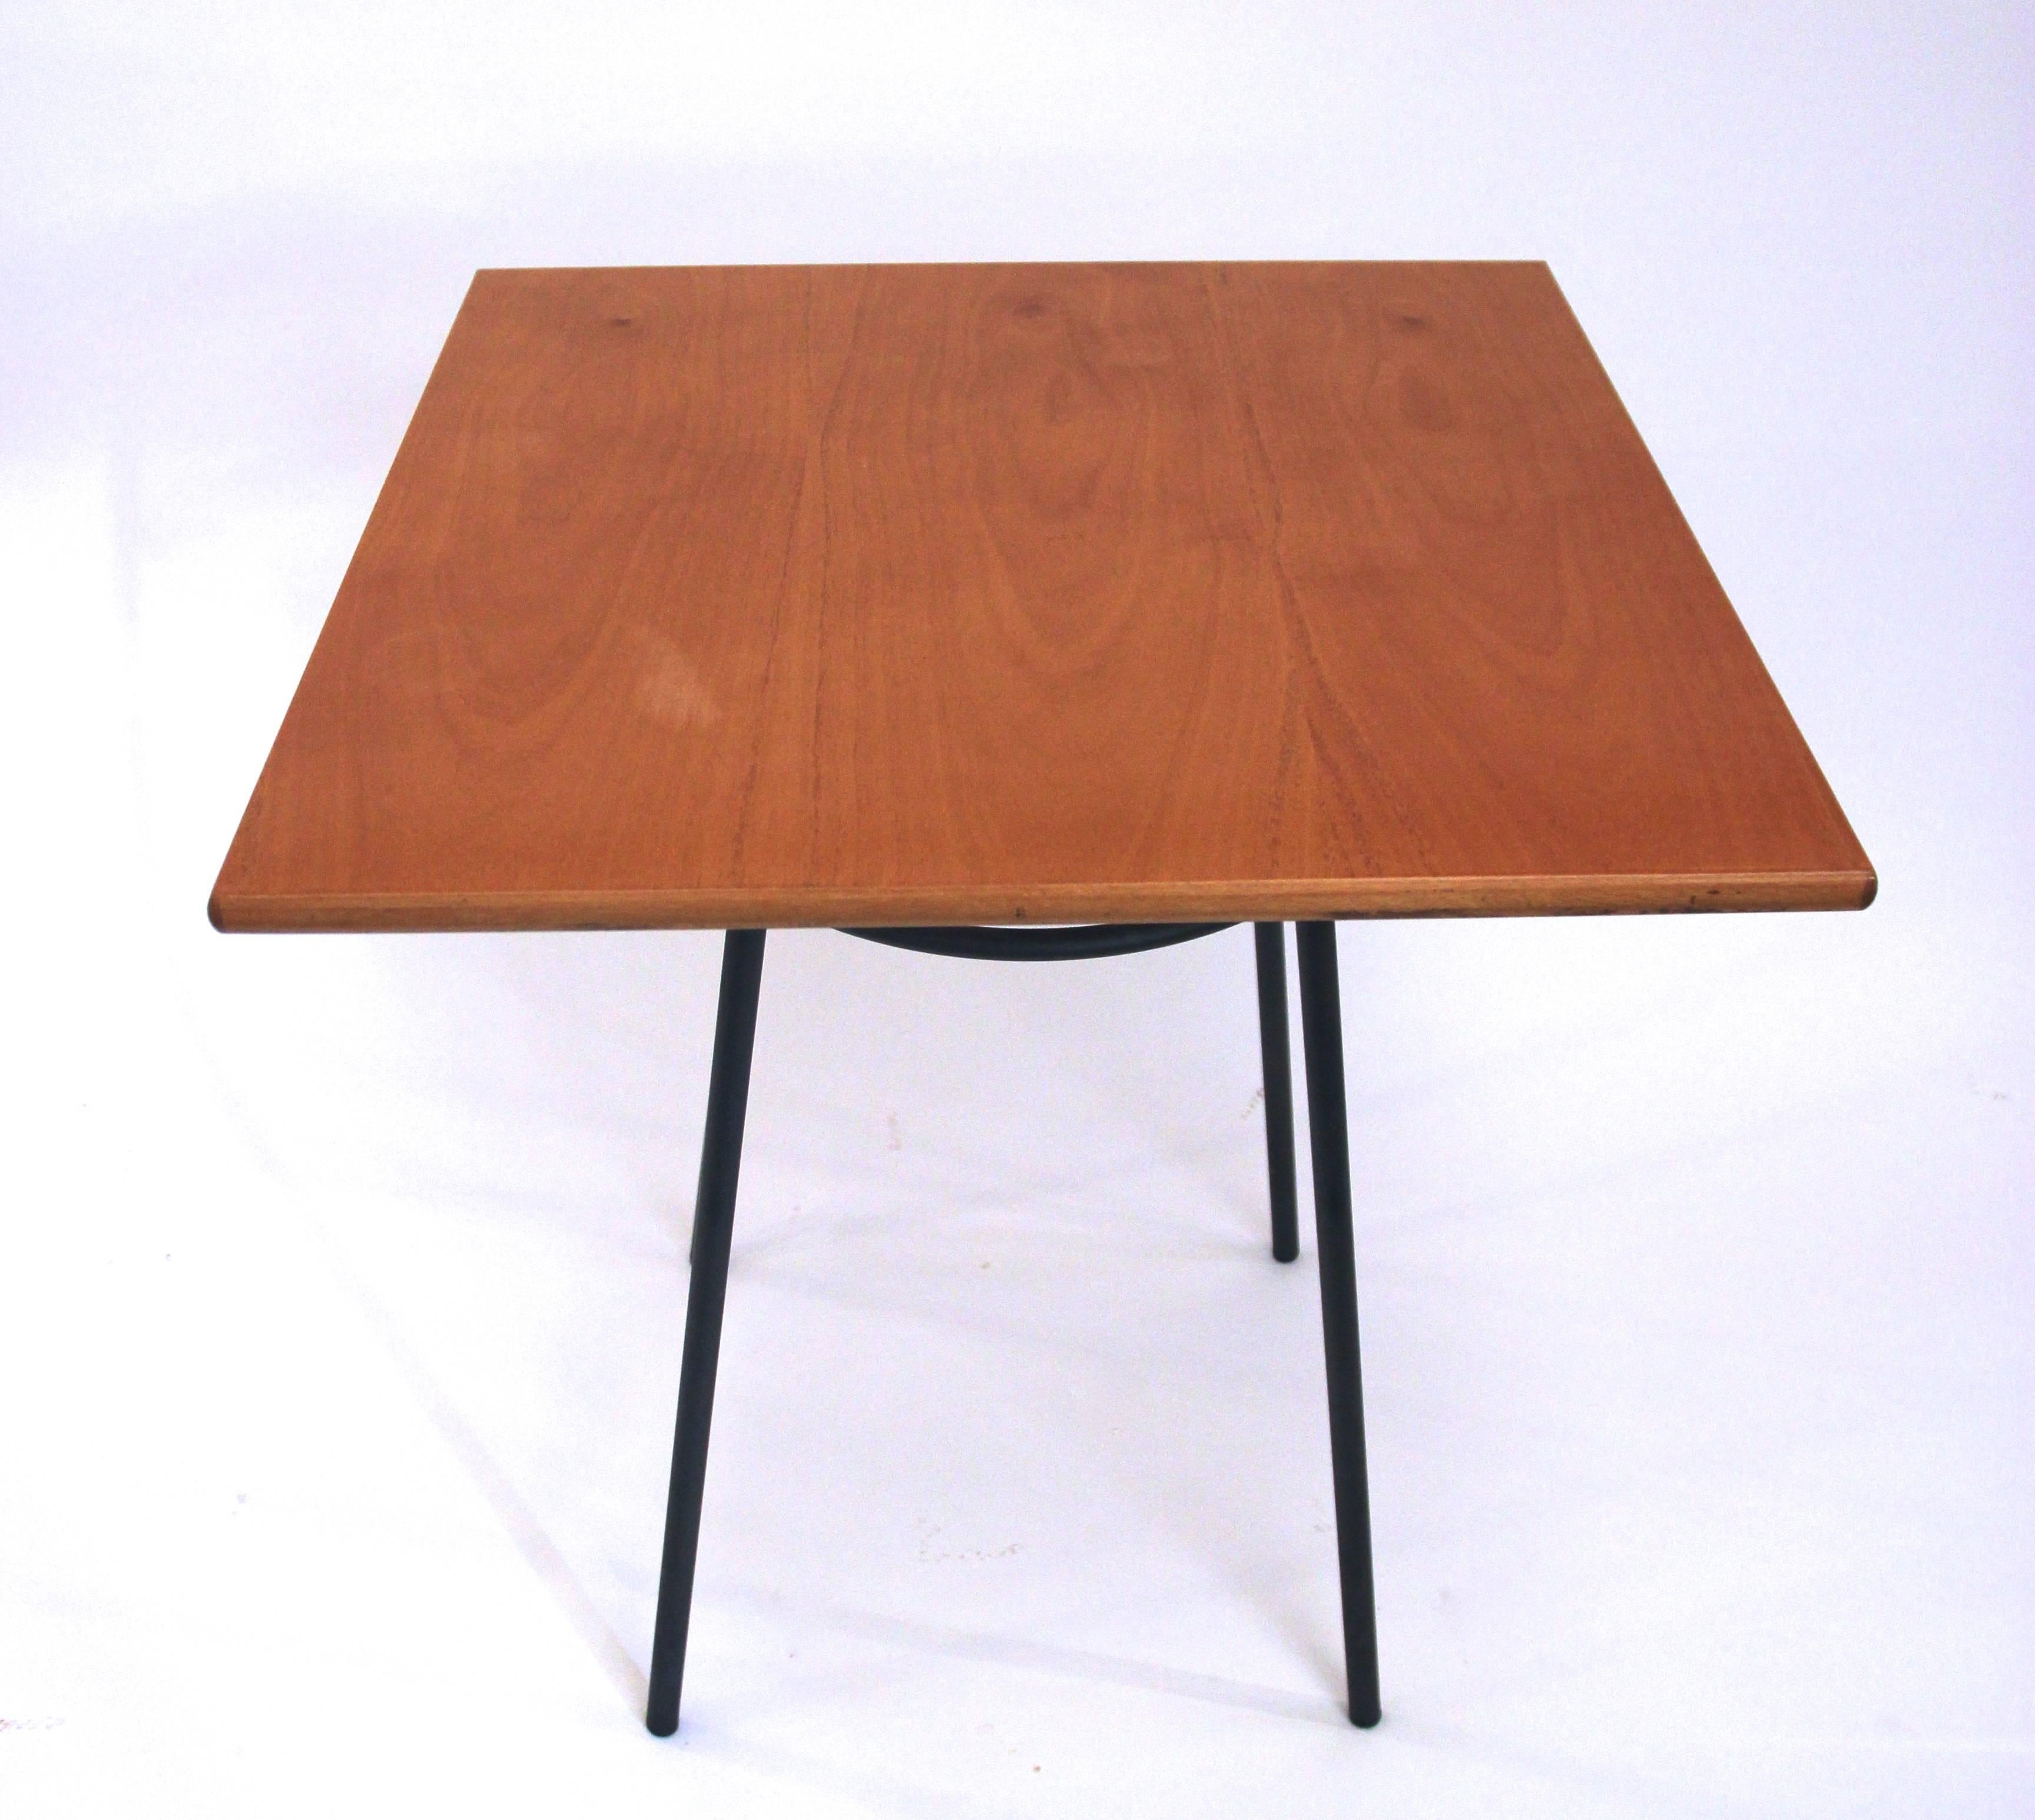 Hans Bellmann.
Manufacture Horgen-Glarus,
set of ten Dining tables.
Wood and metal structure,
circa 1970, Switzerland.
Measures: Height 77cm, width 70 cm, depth 70 cm.